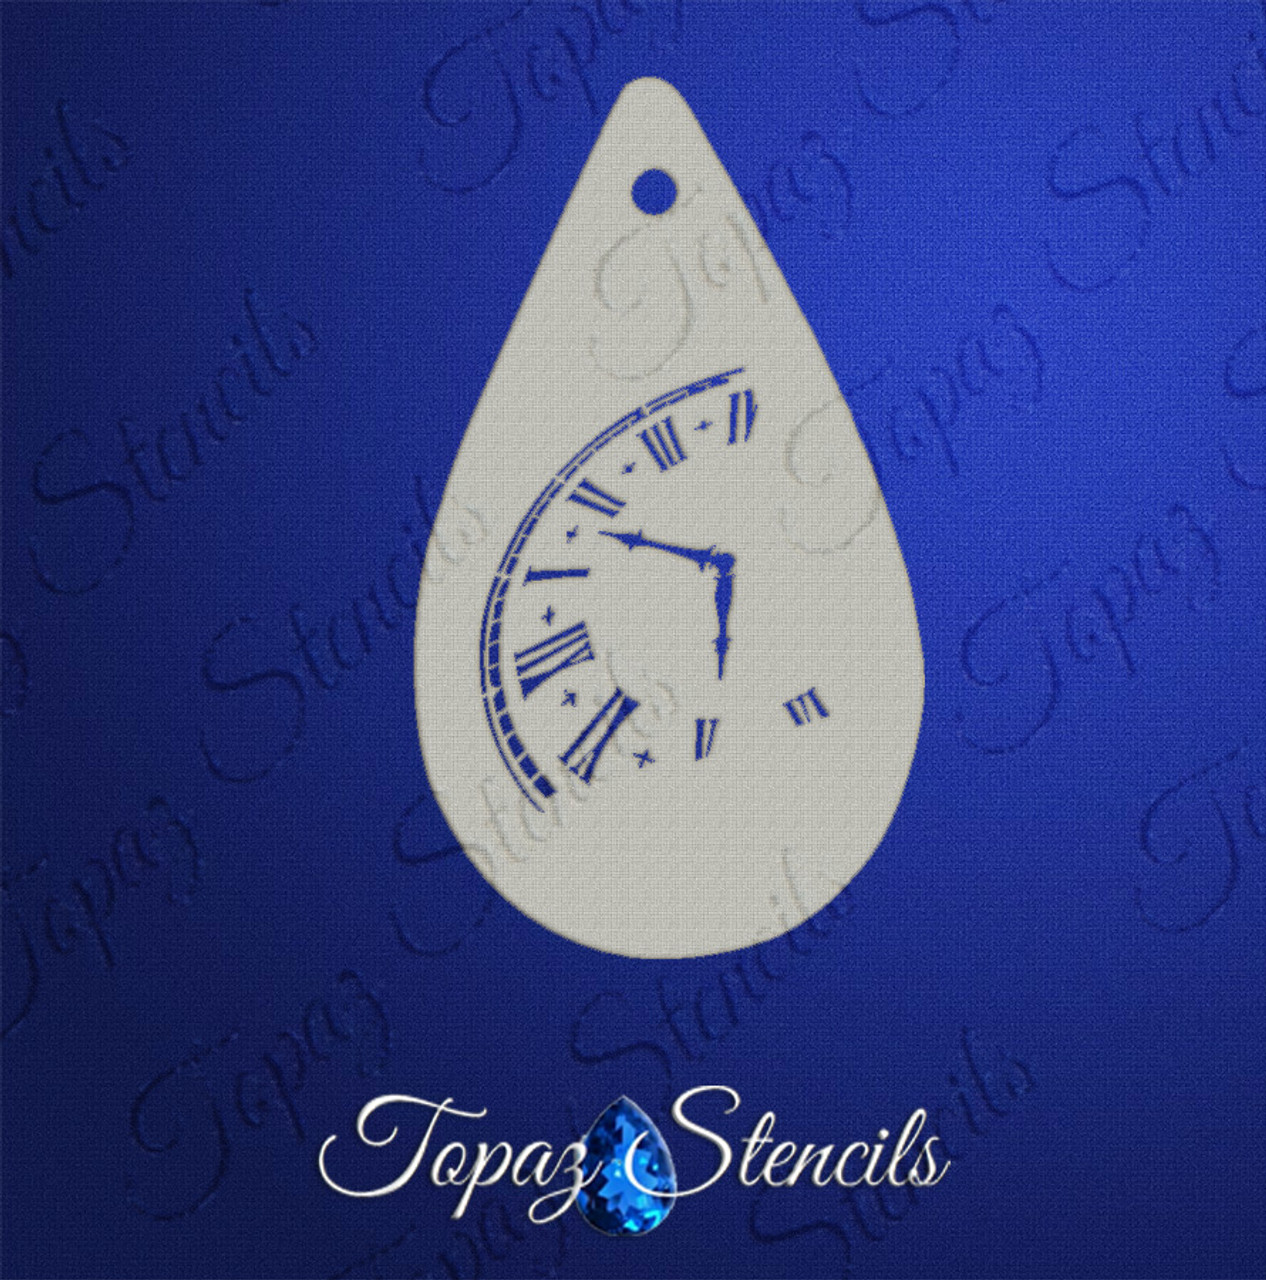 Distressed Clock Face - Topaz Stencil